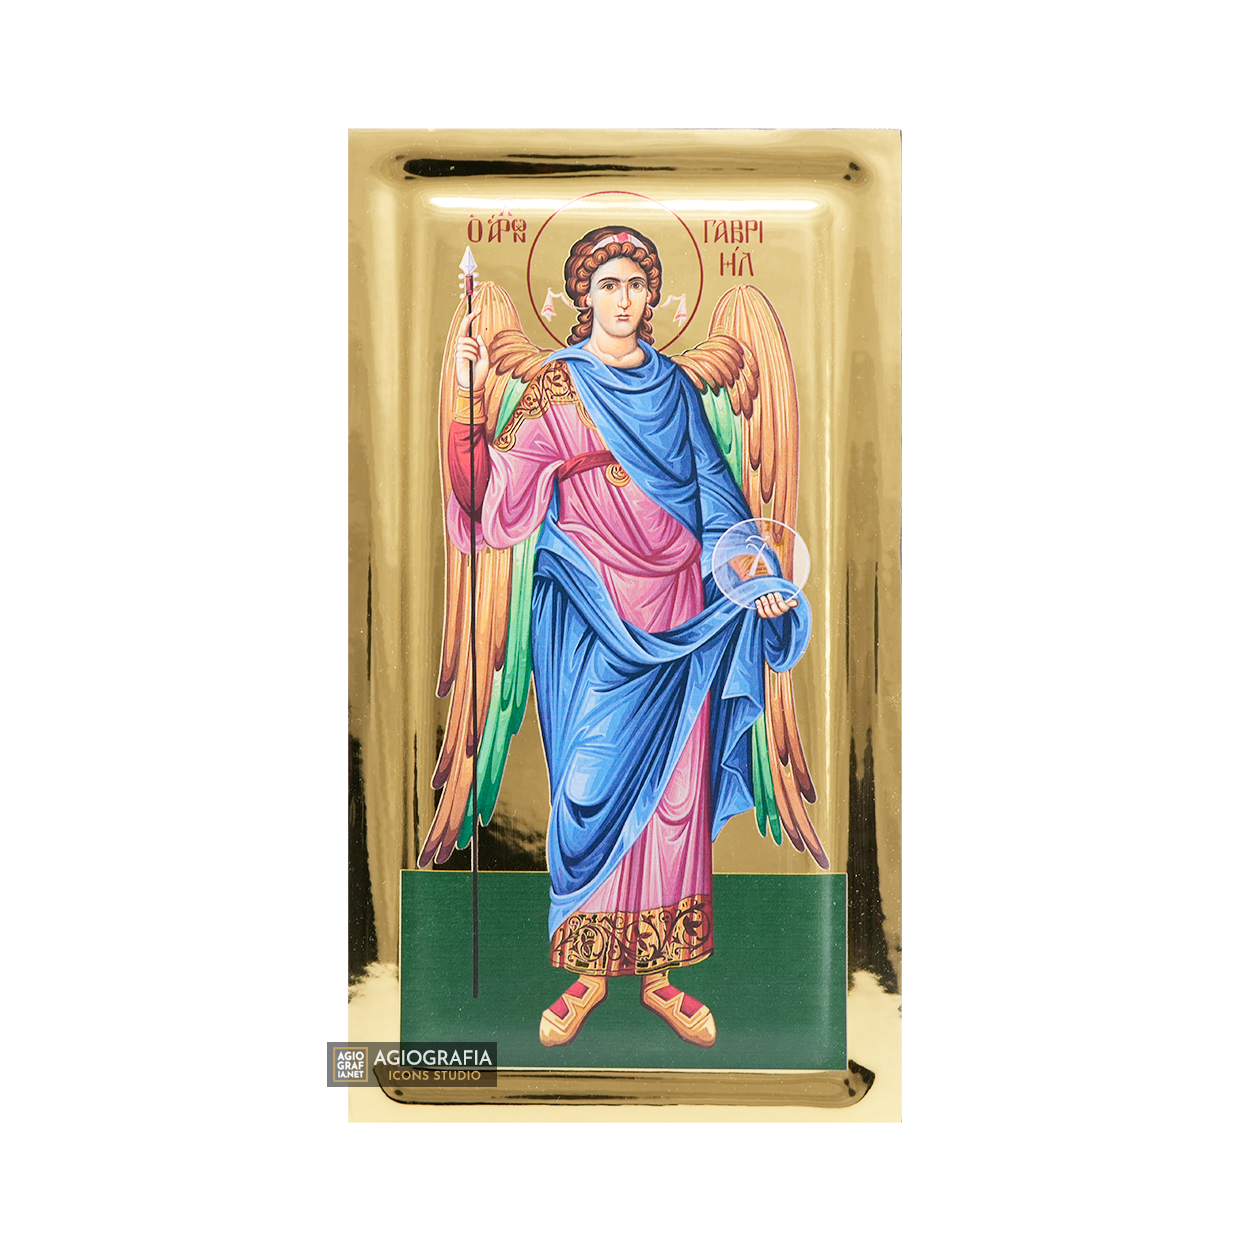 Archangel Gabriel Christian Icon with Gilding Effect background